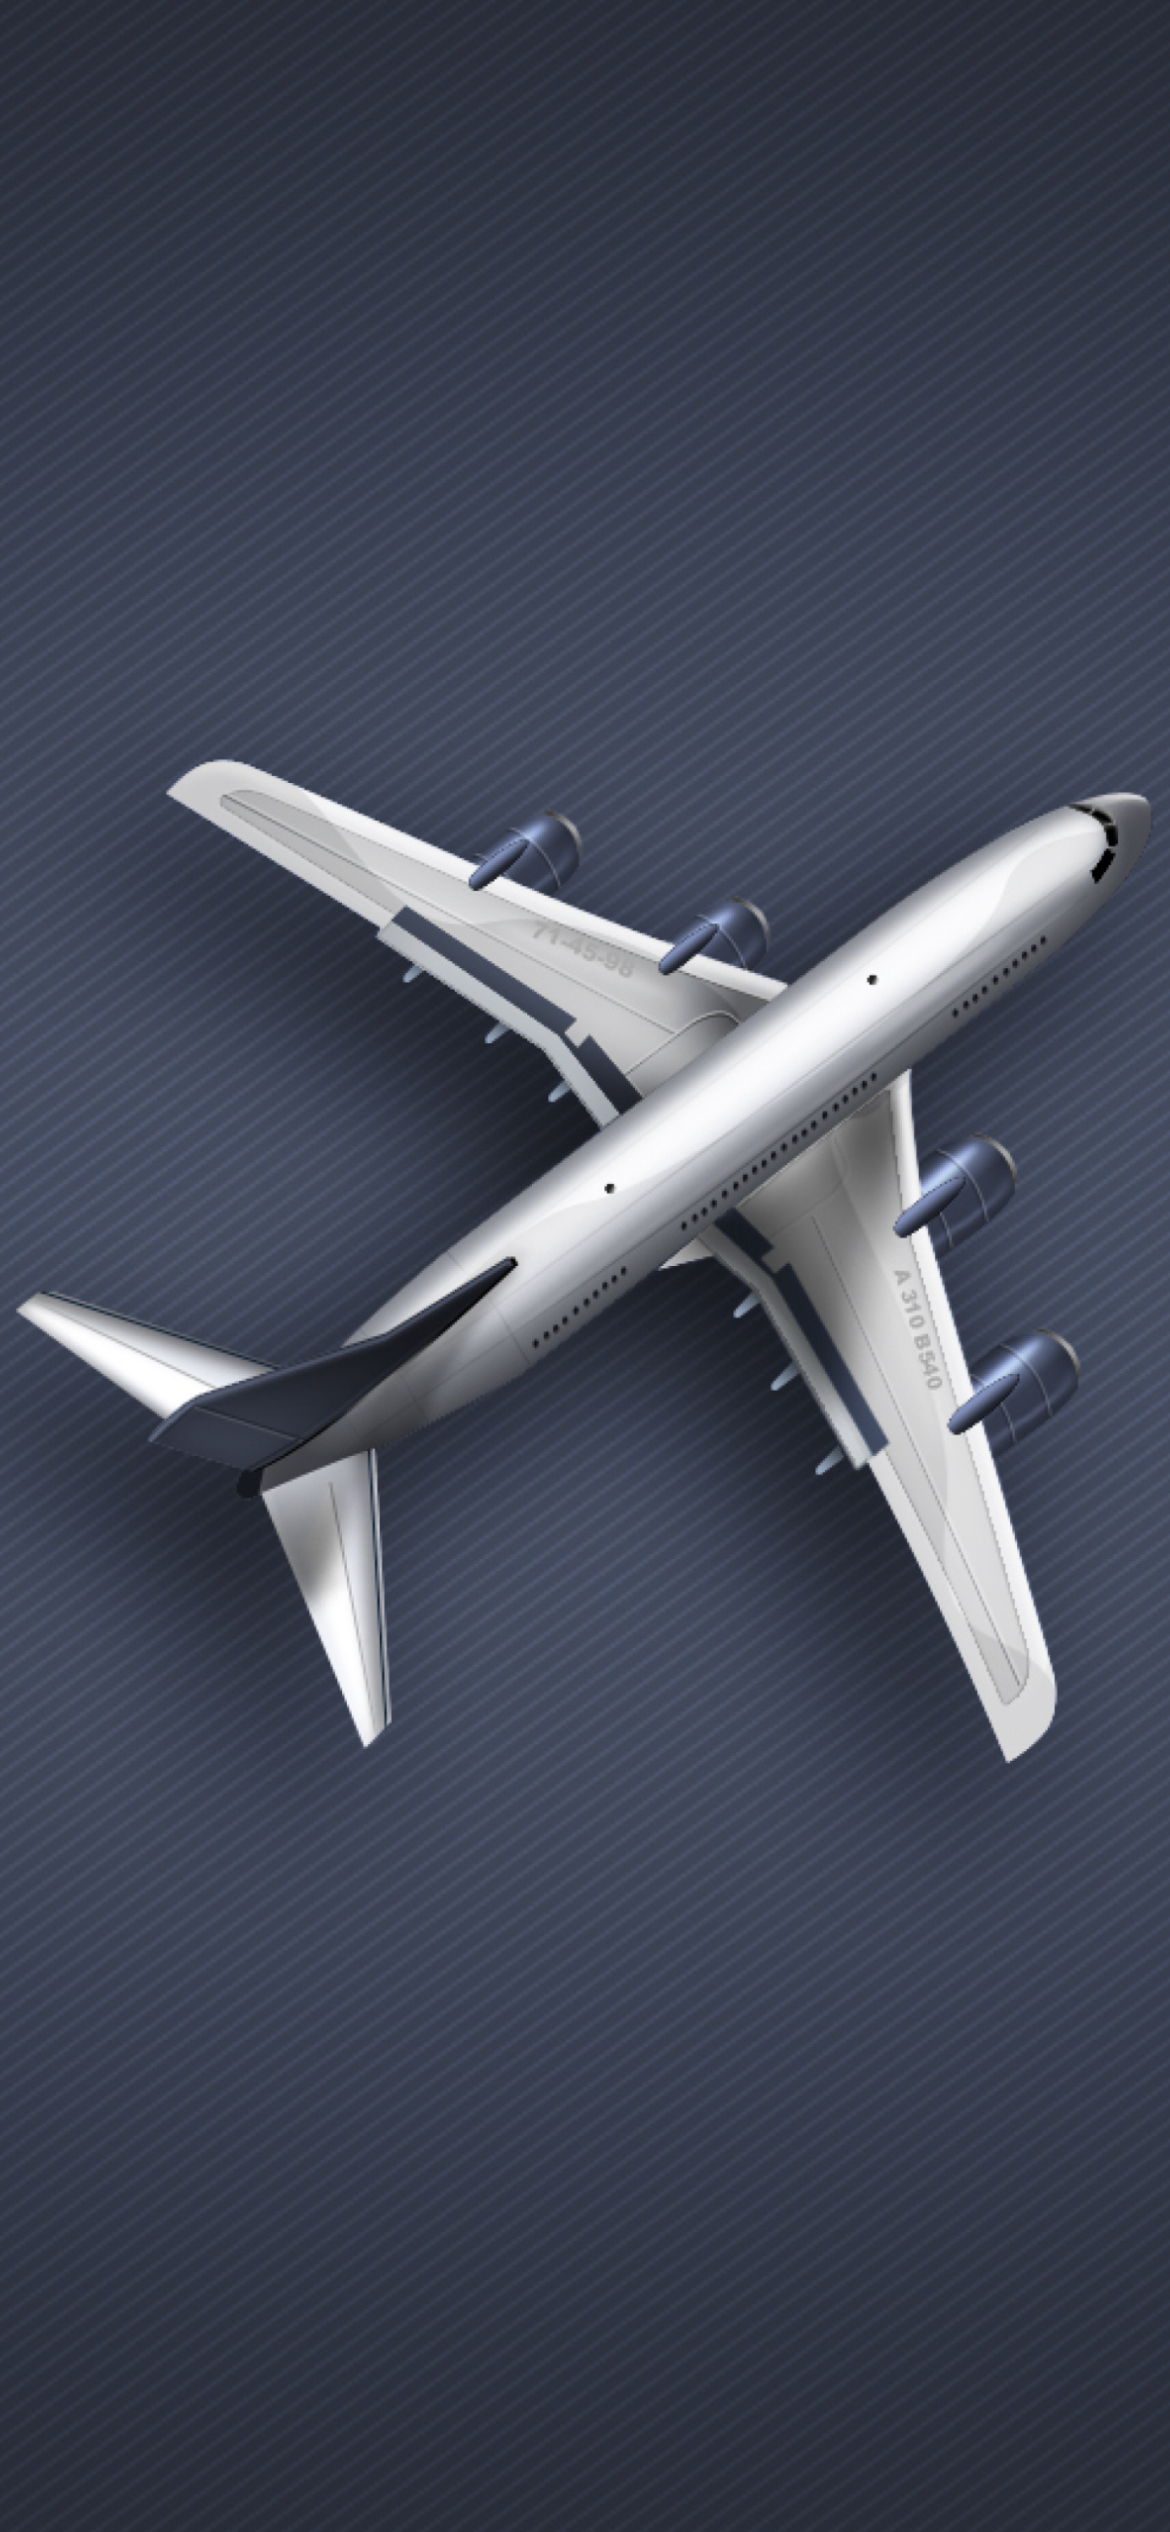 Das Boeing Aircraft Wallpaper 1170x2532